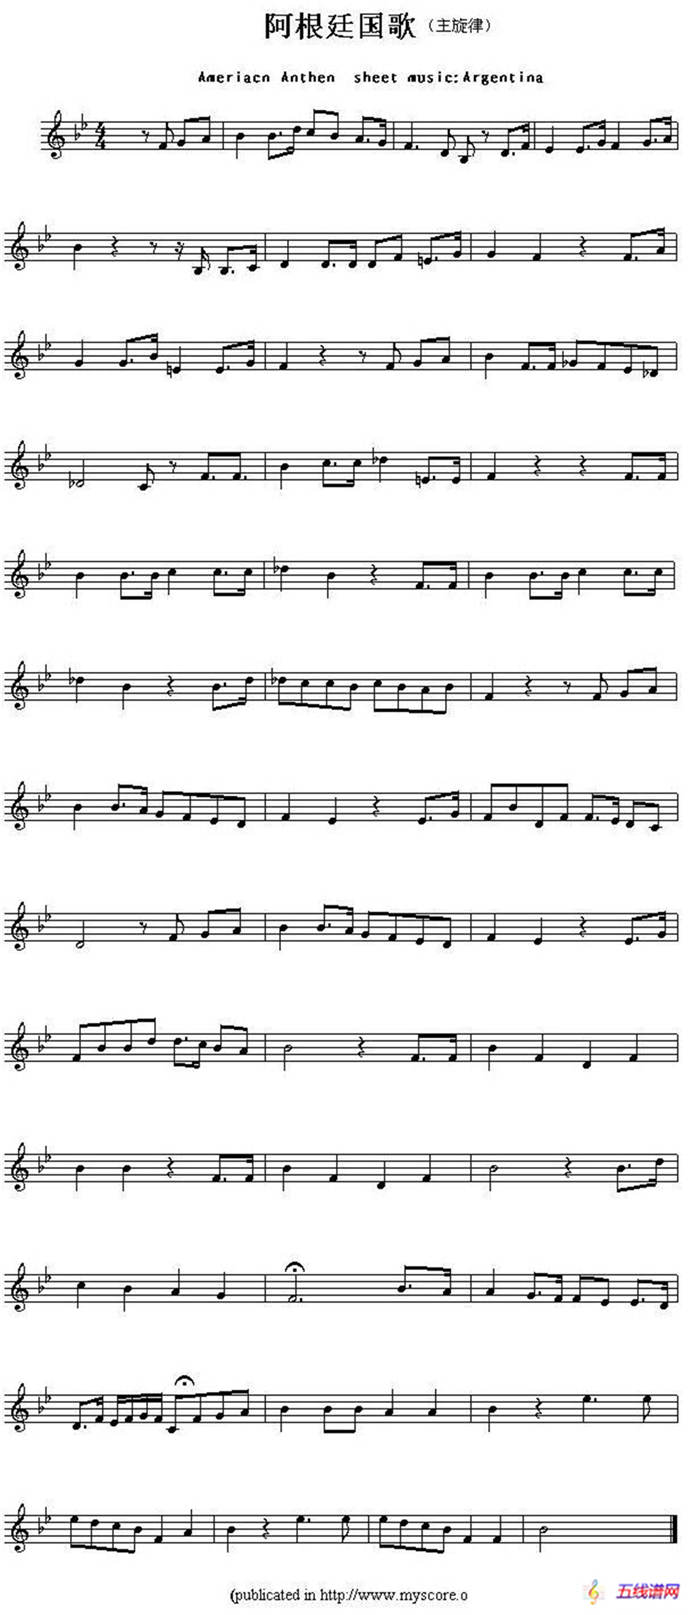 各国国歌主旋律：阿根廷（Ameriacn Anthem sheet music:Argentina）